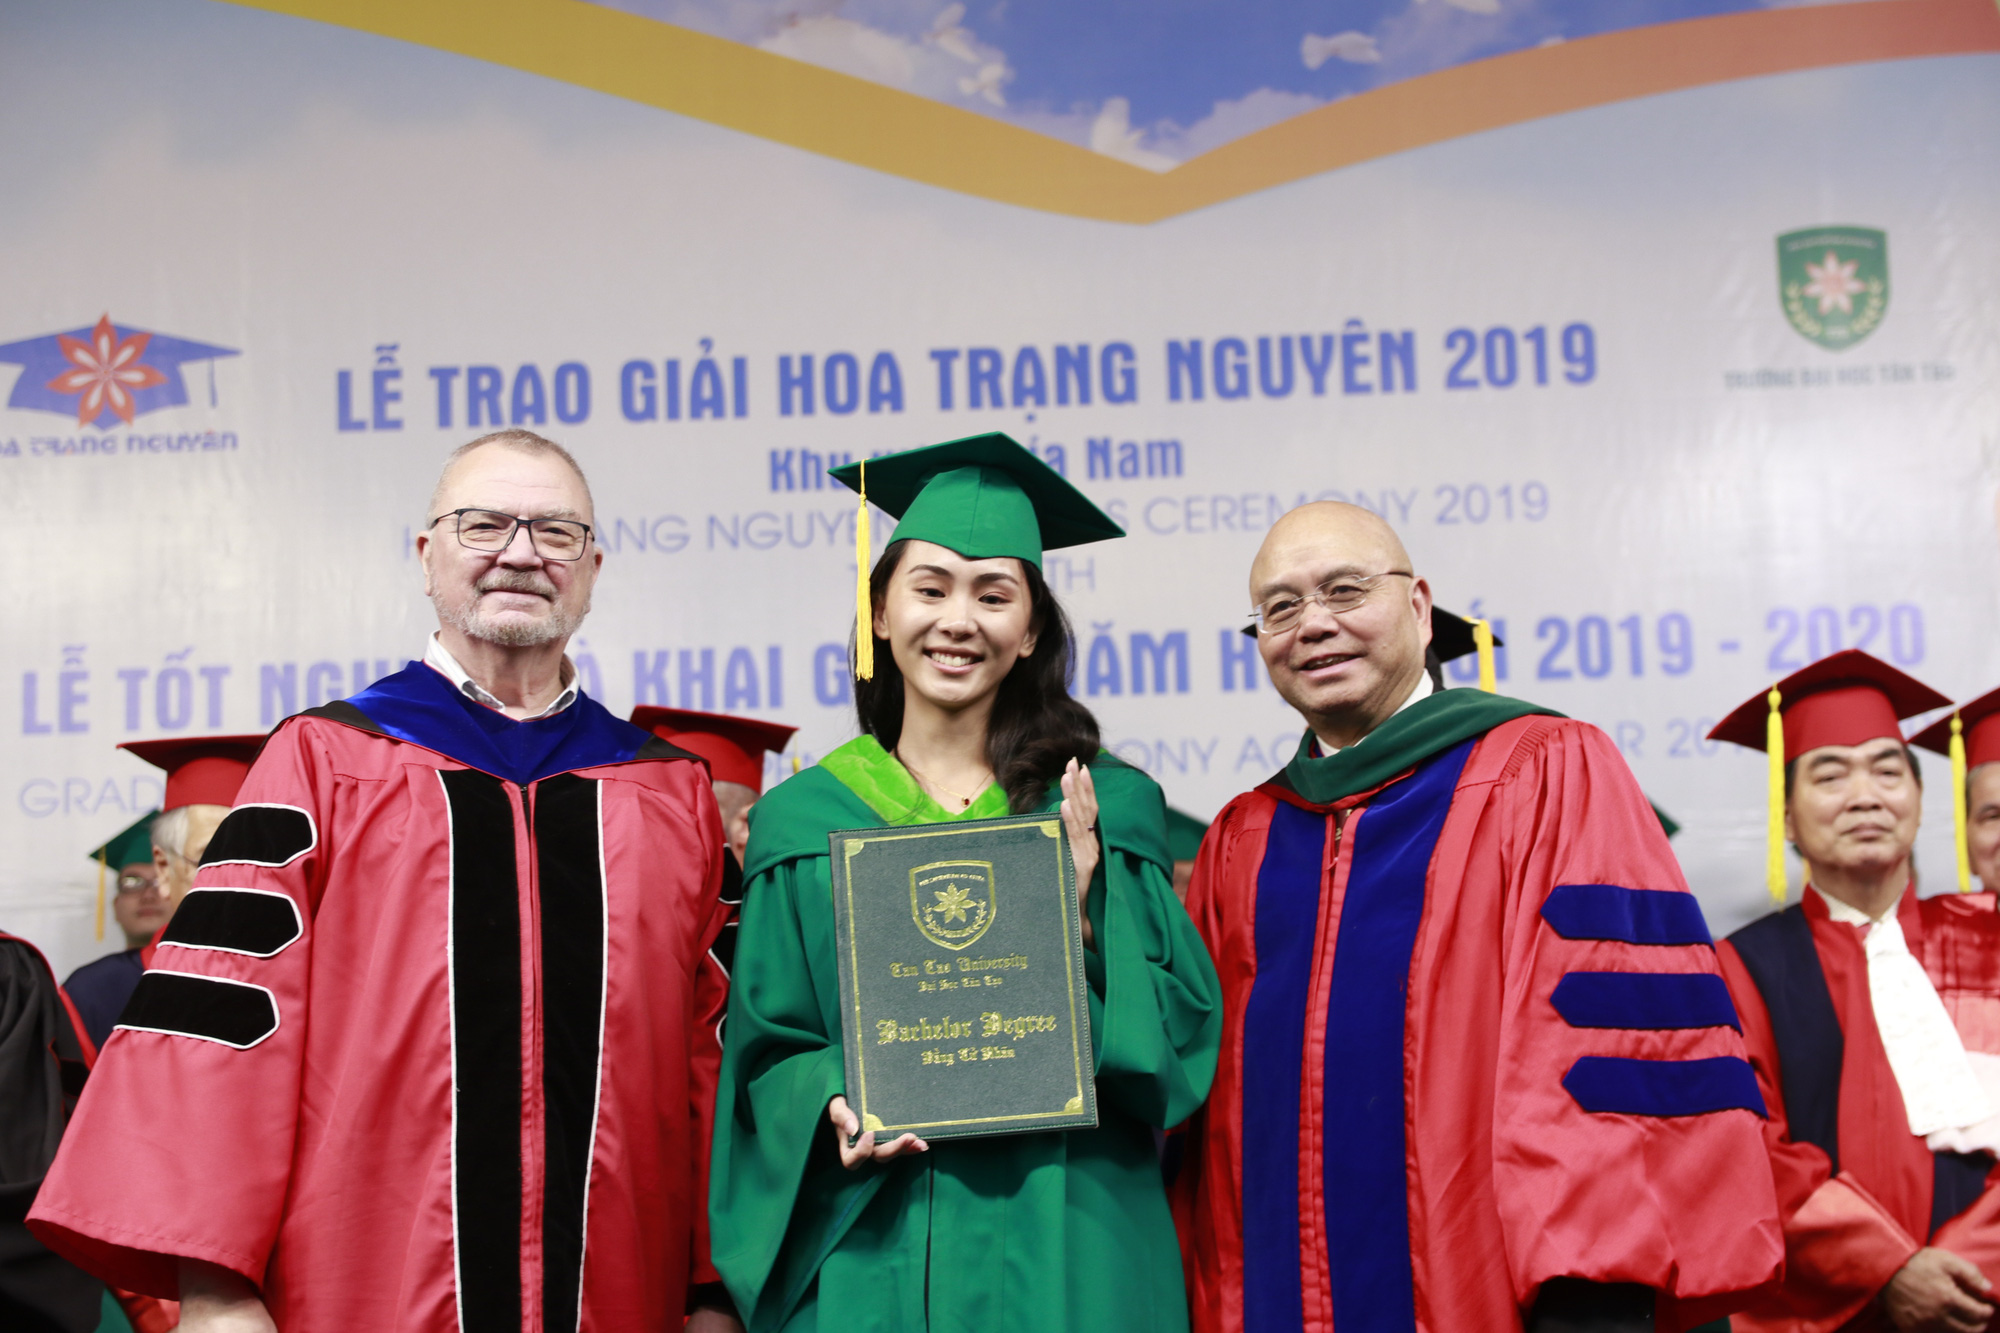 Vietnamese medical students achieve success at Tan Tao University